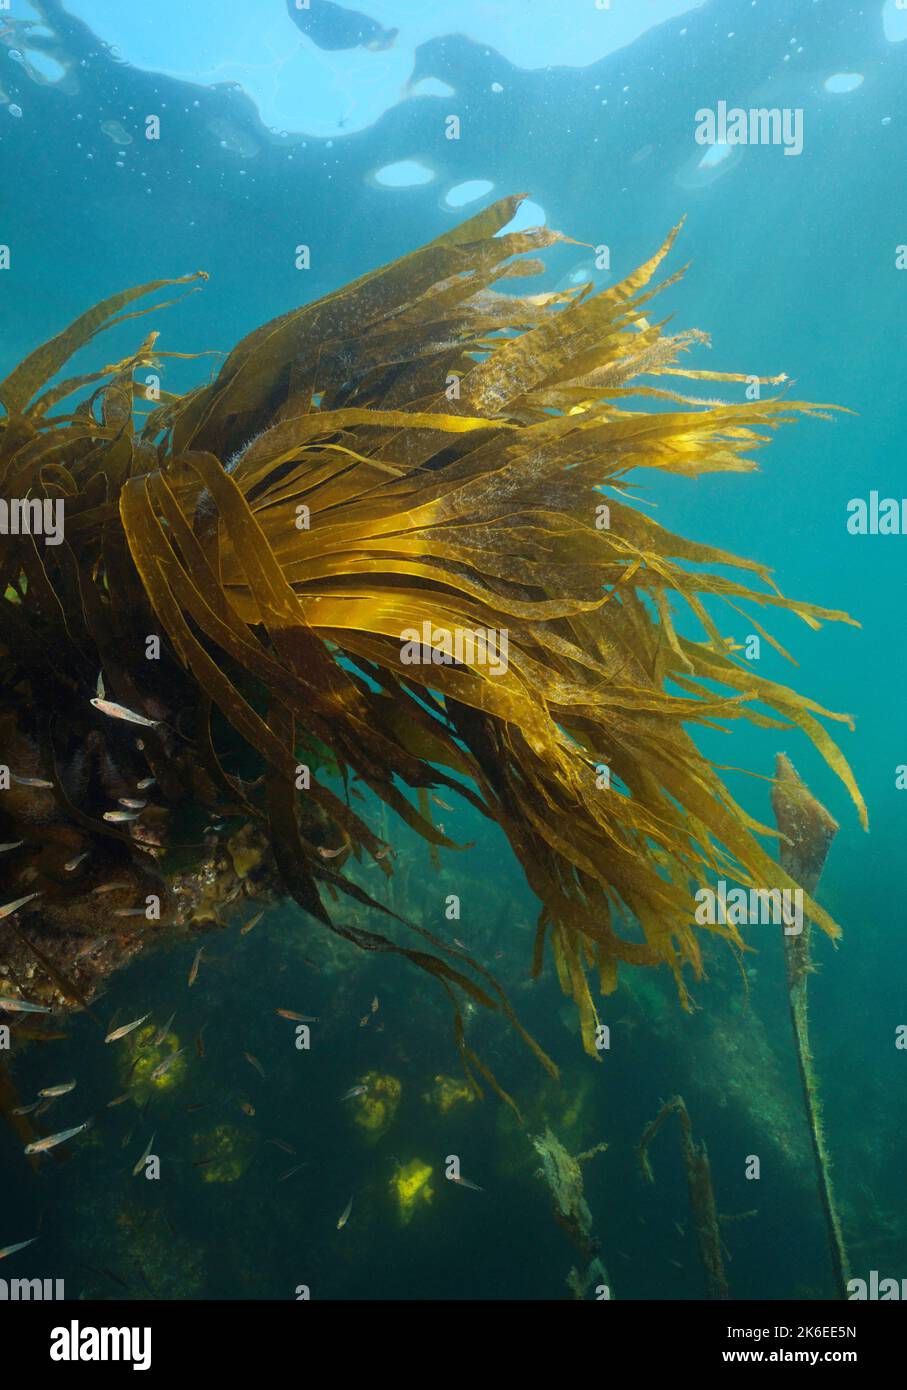 Laminaria kelp seaweed foliage, brown alga underwater in the ocean, Eastern Atlantic, Spain, Galicia Stock Photo